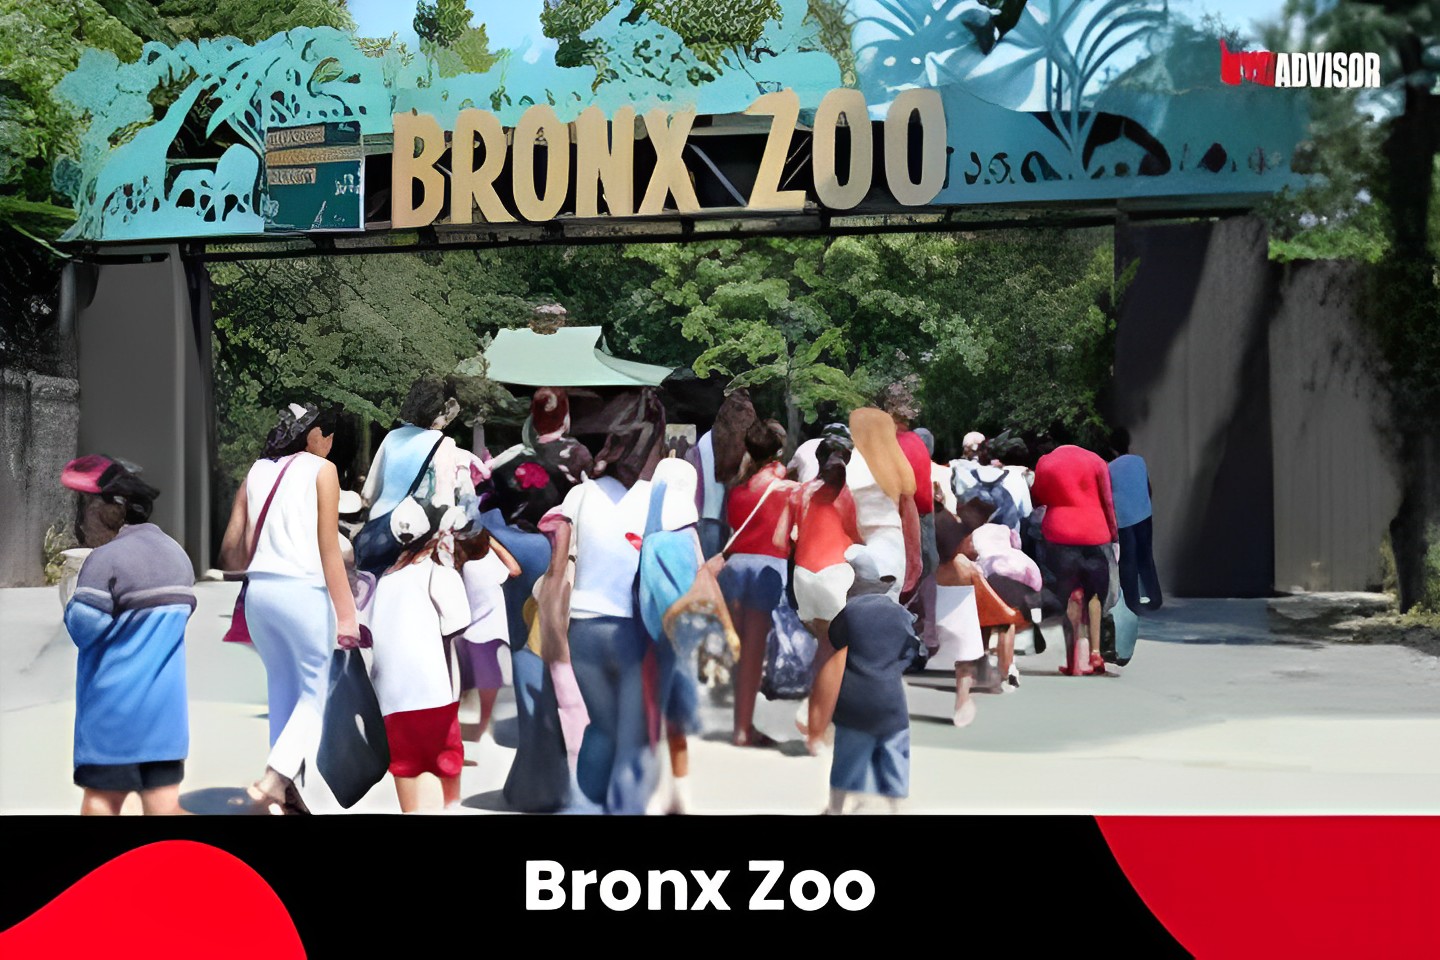 Bronx Zoo in New York City